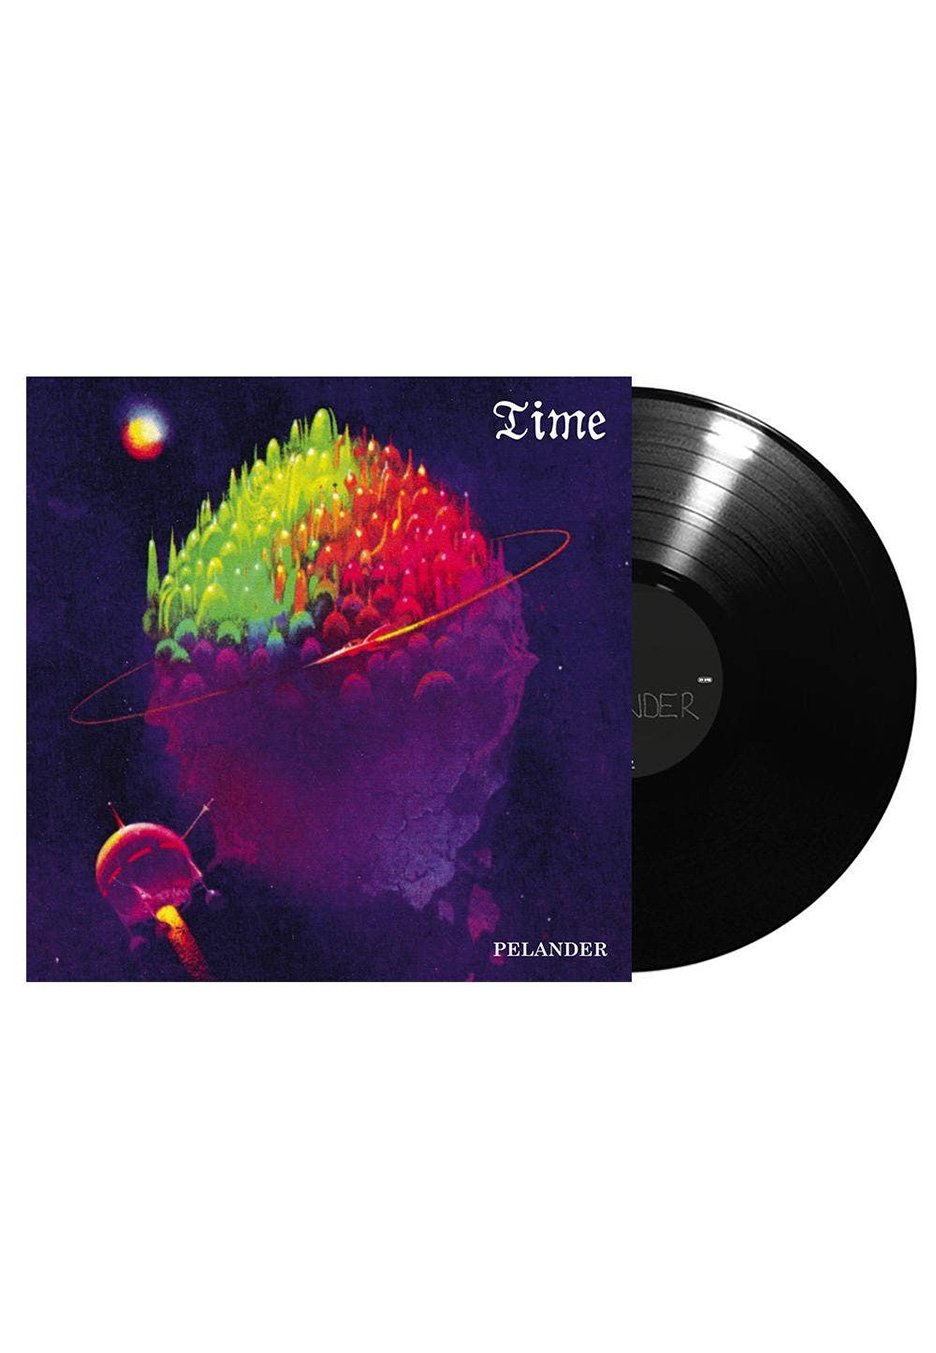 Pelander - Time - Vinyl